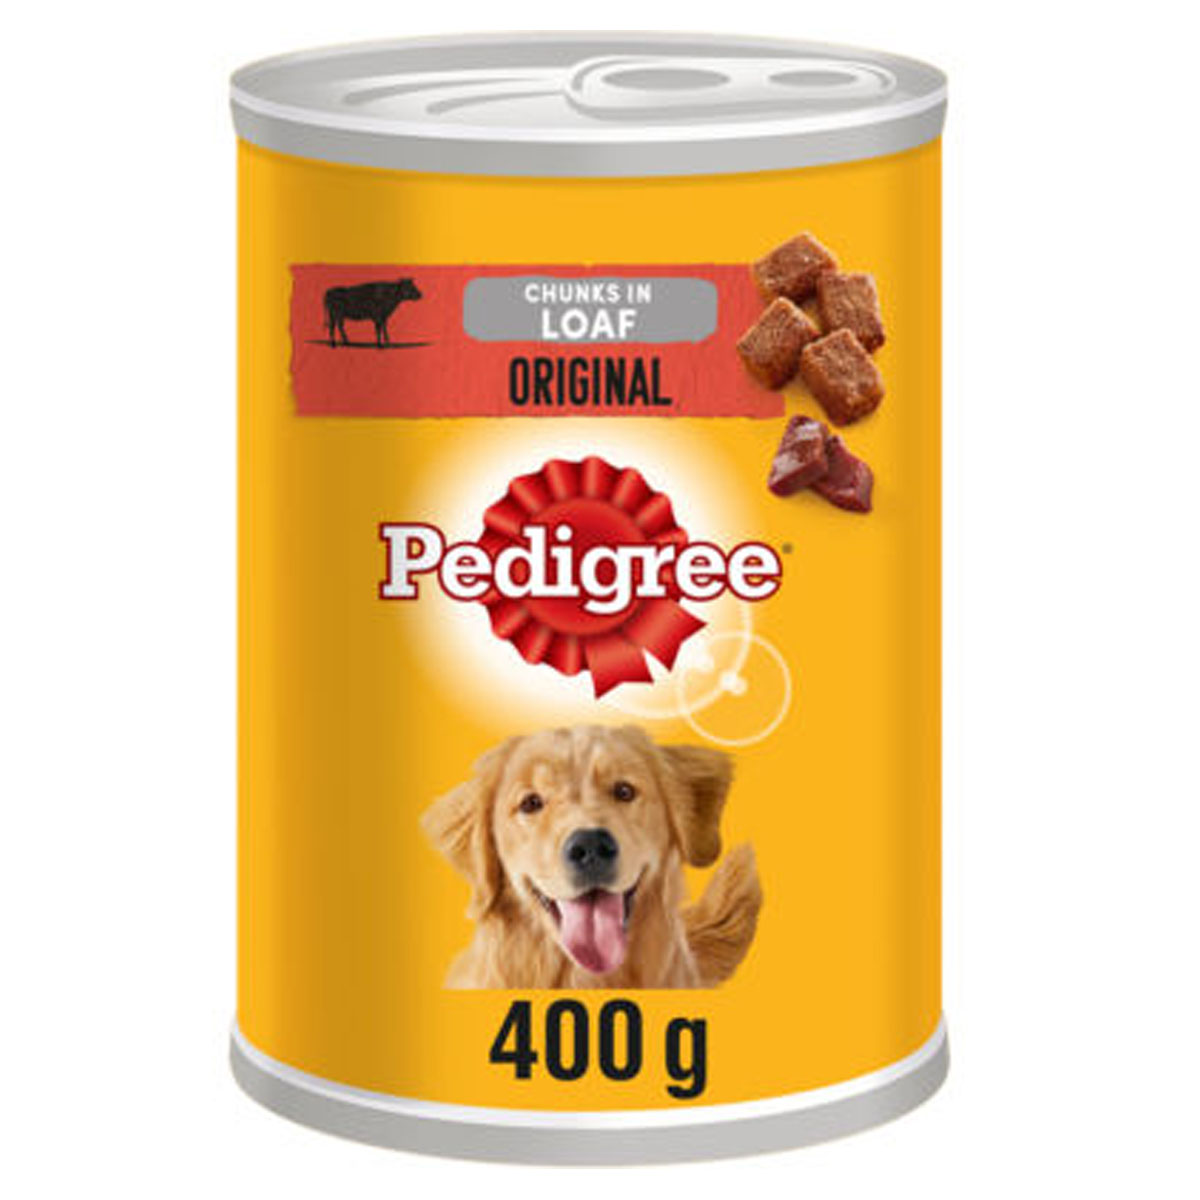 Pedigree - Adult Wet Dog Food Tin Original in Loaf - 400g - Continental Food Store